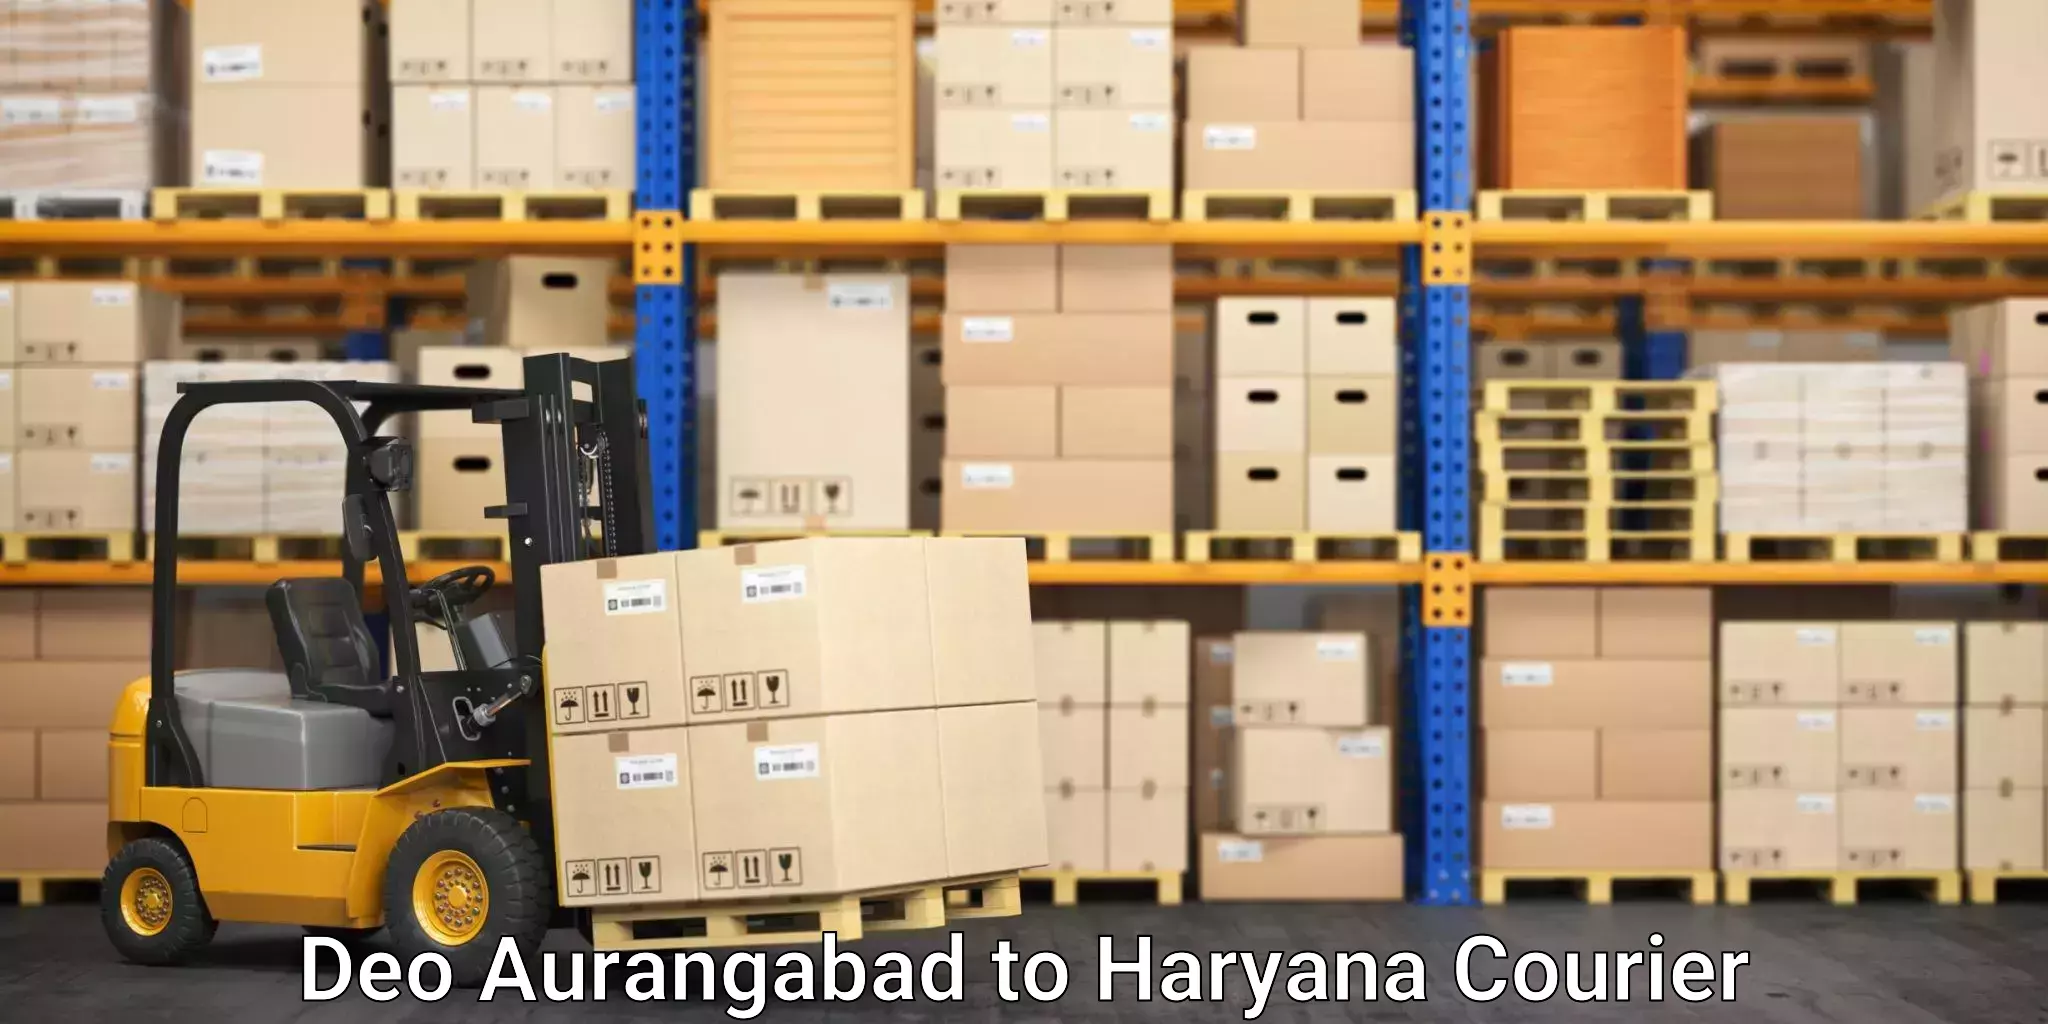 Cost-effective furniture movers Deo Aurangabad to Bhuna